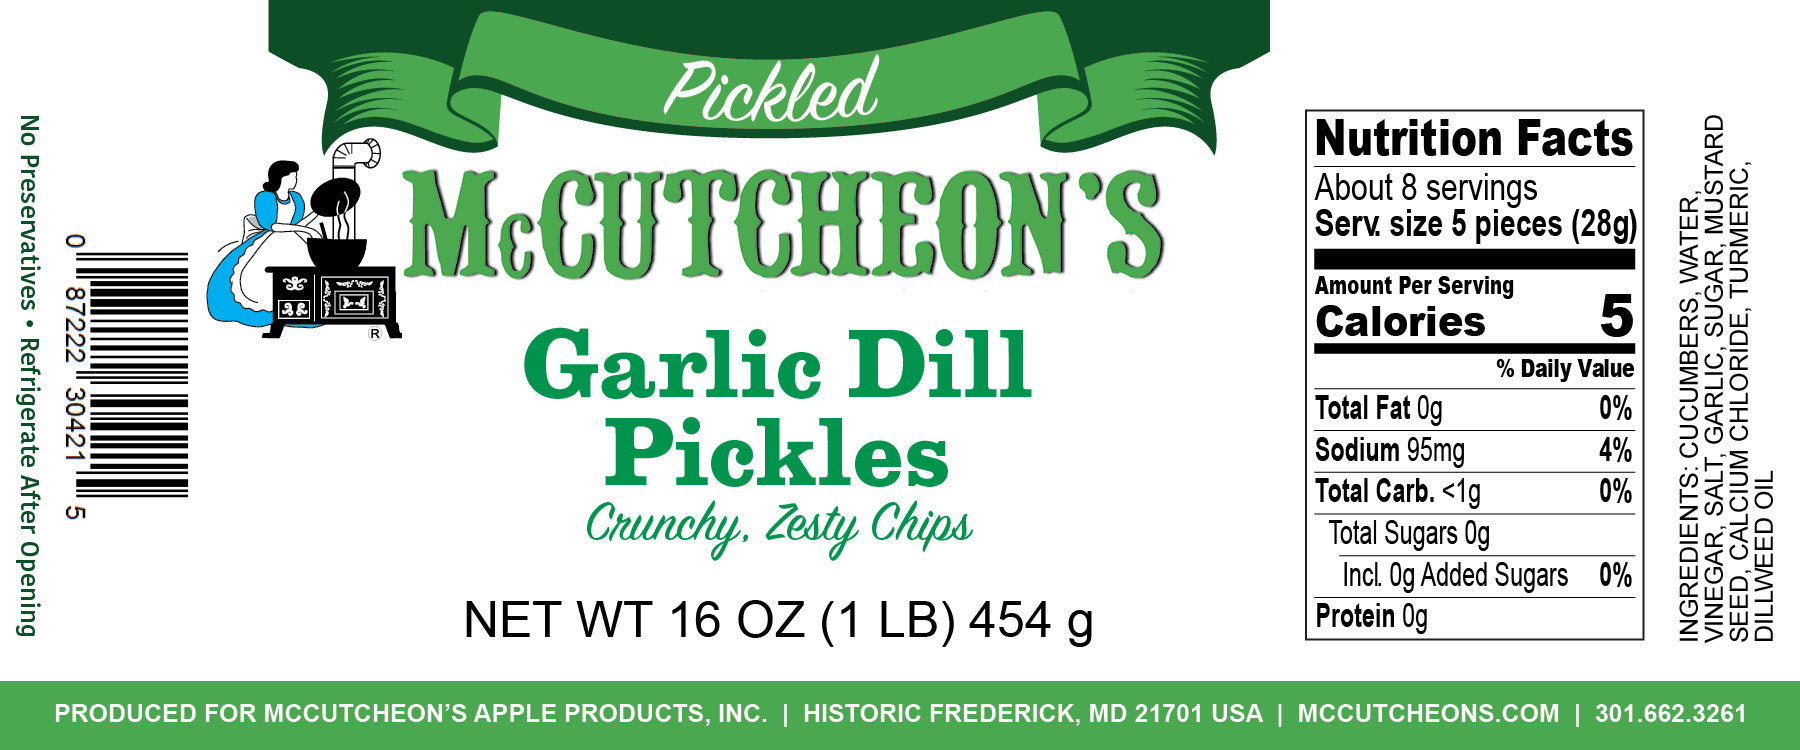 nutrition label for McCutcheon's garlic dill pickles